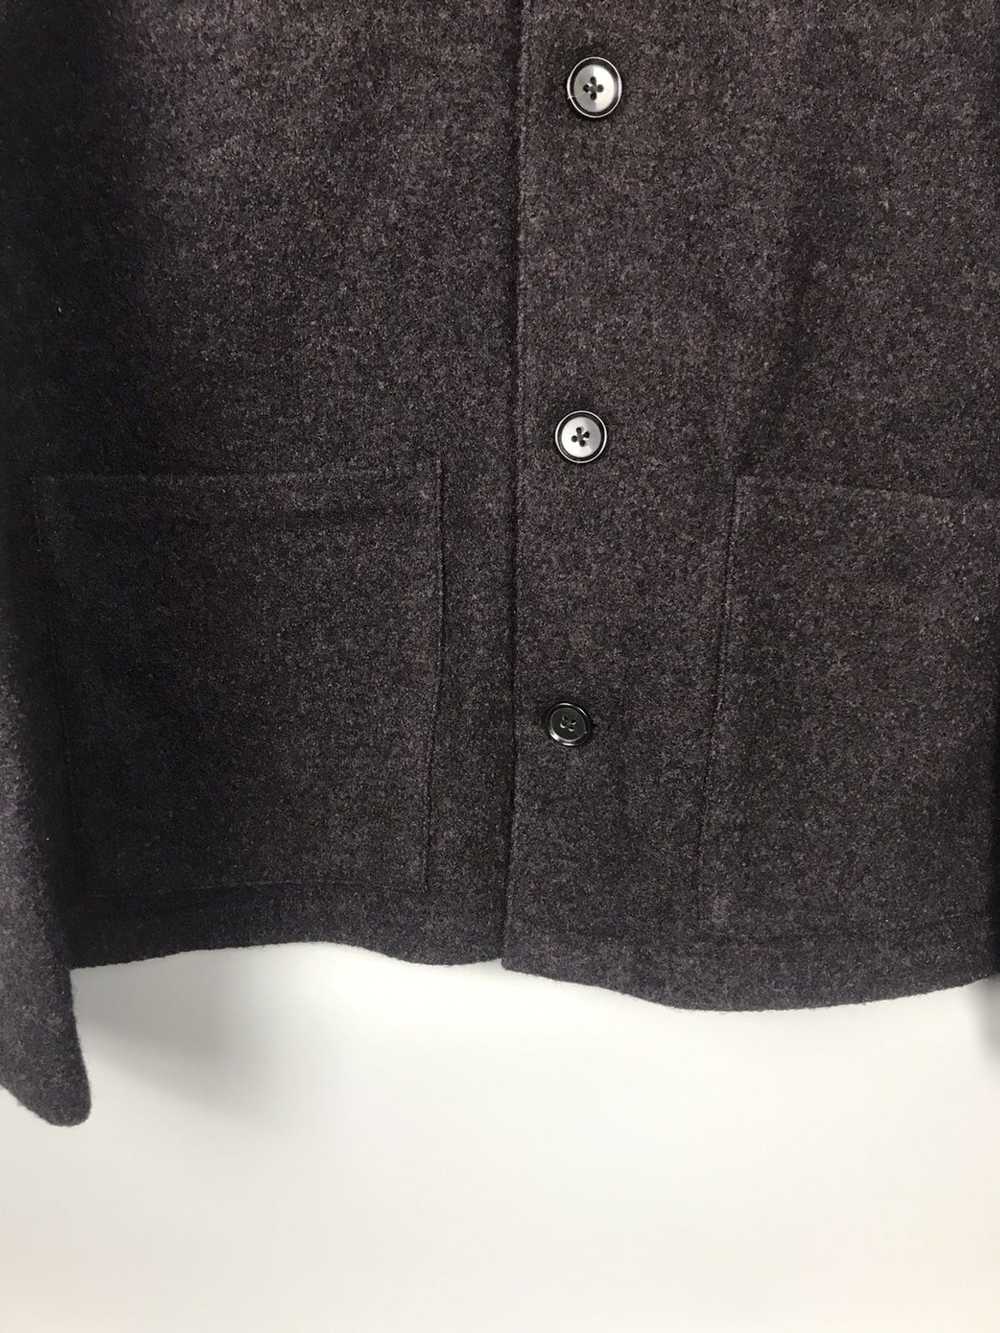 Nn07 Japanese brand x streetwear x wool overshirt - image 4